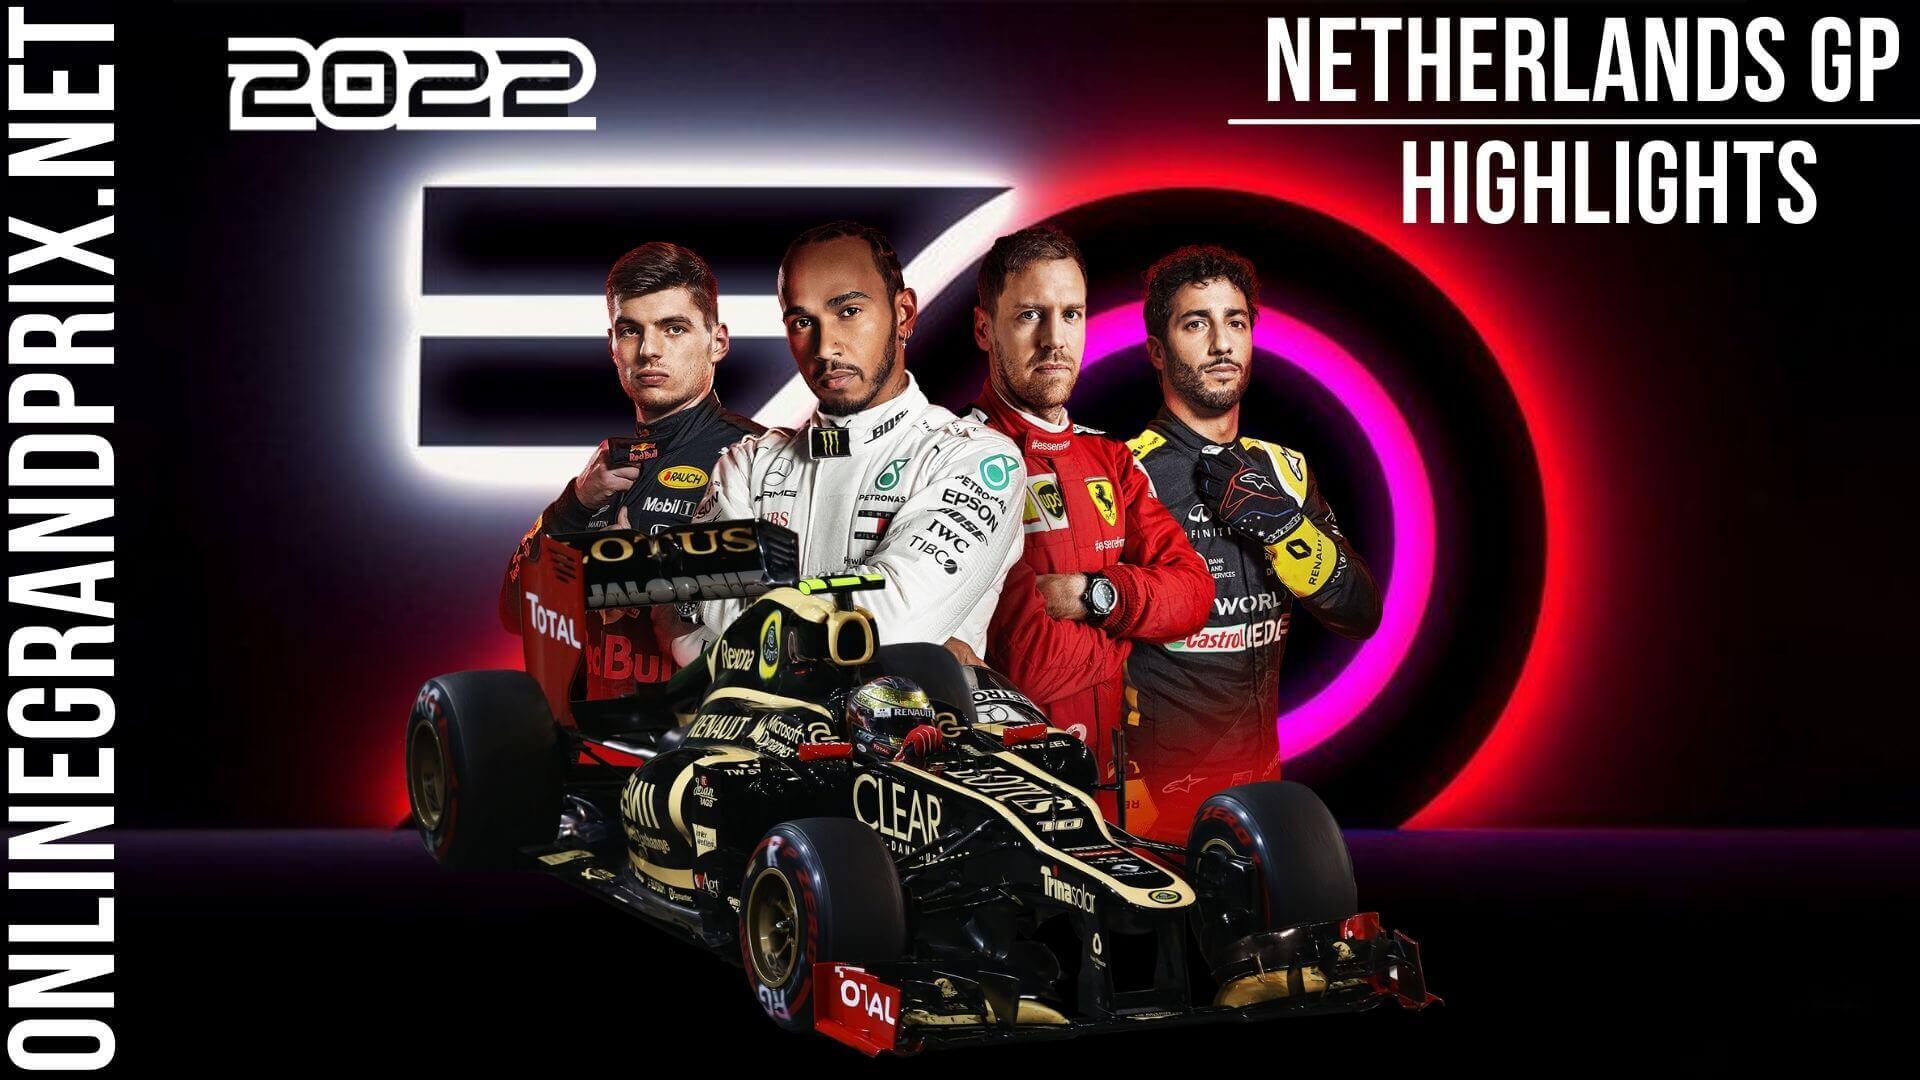 Netherlands GP F1 Highlights 2022